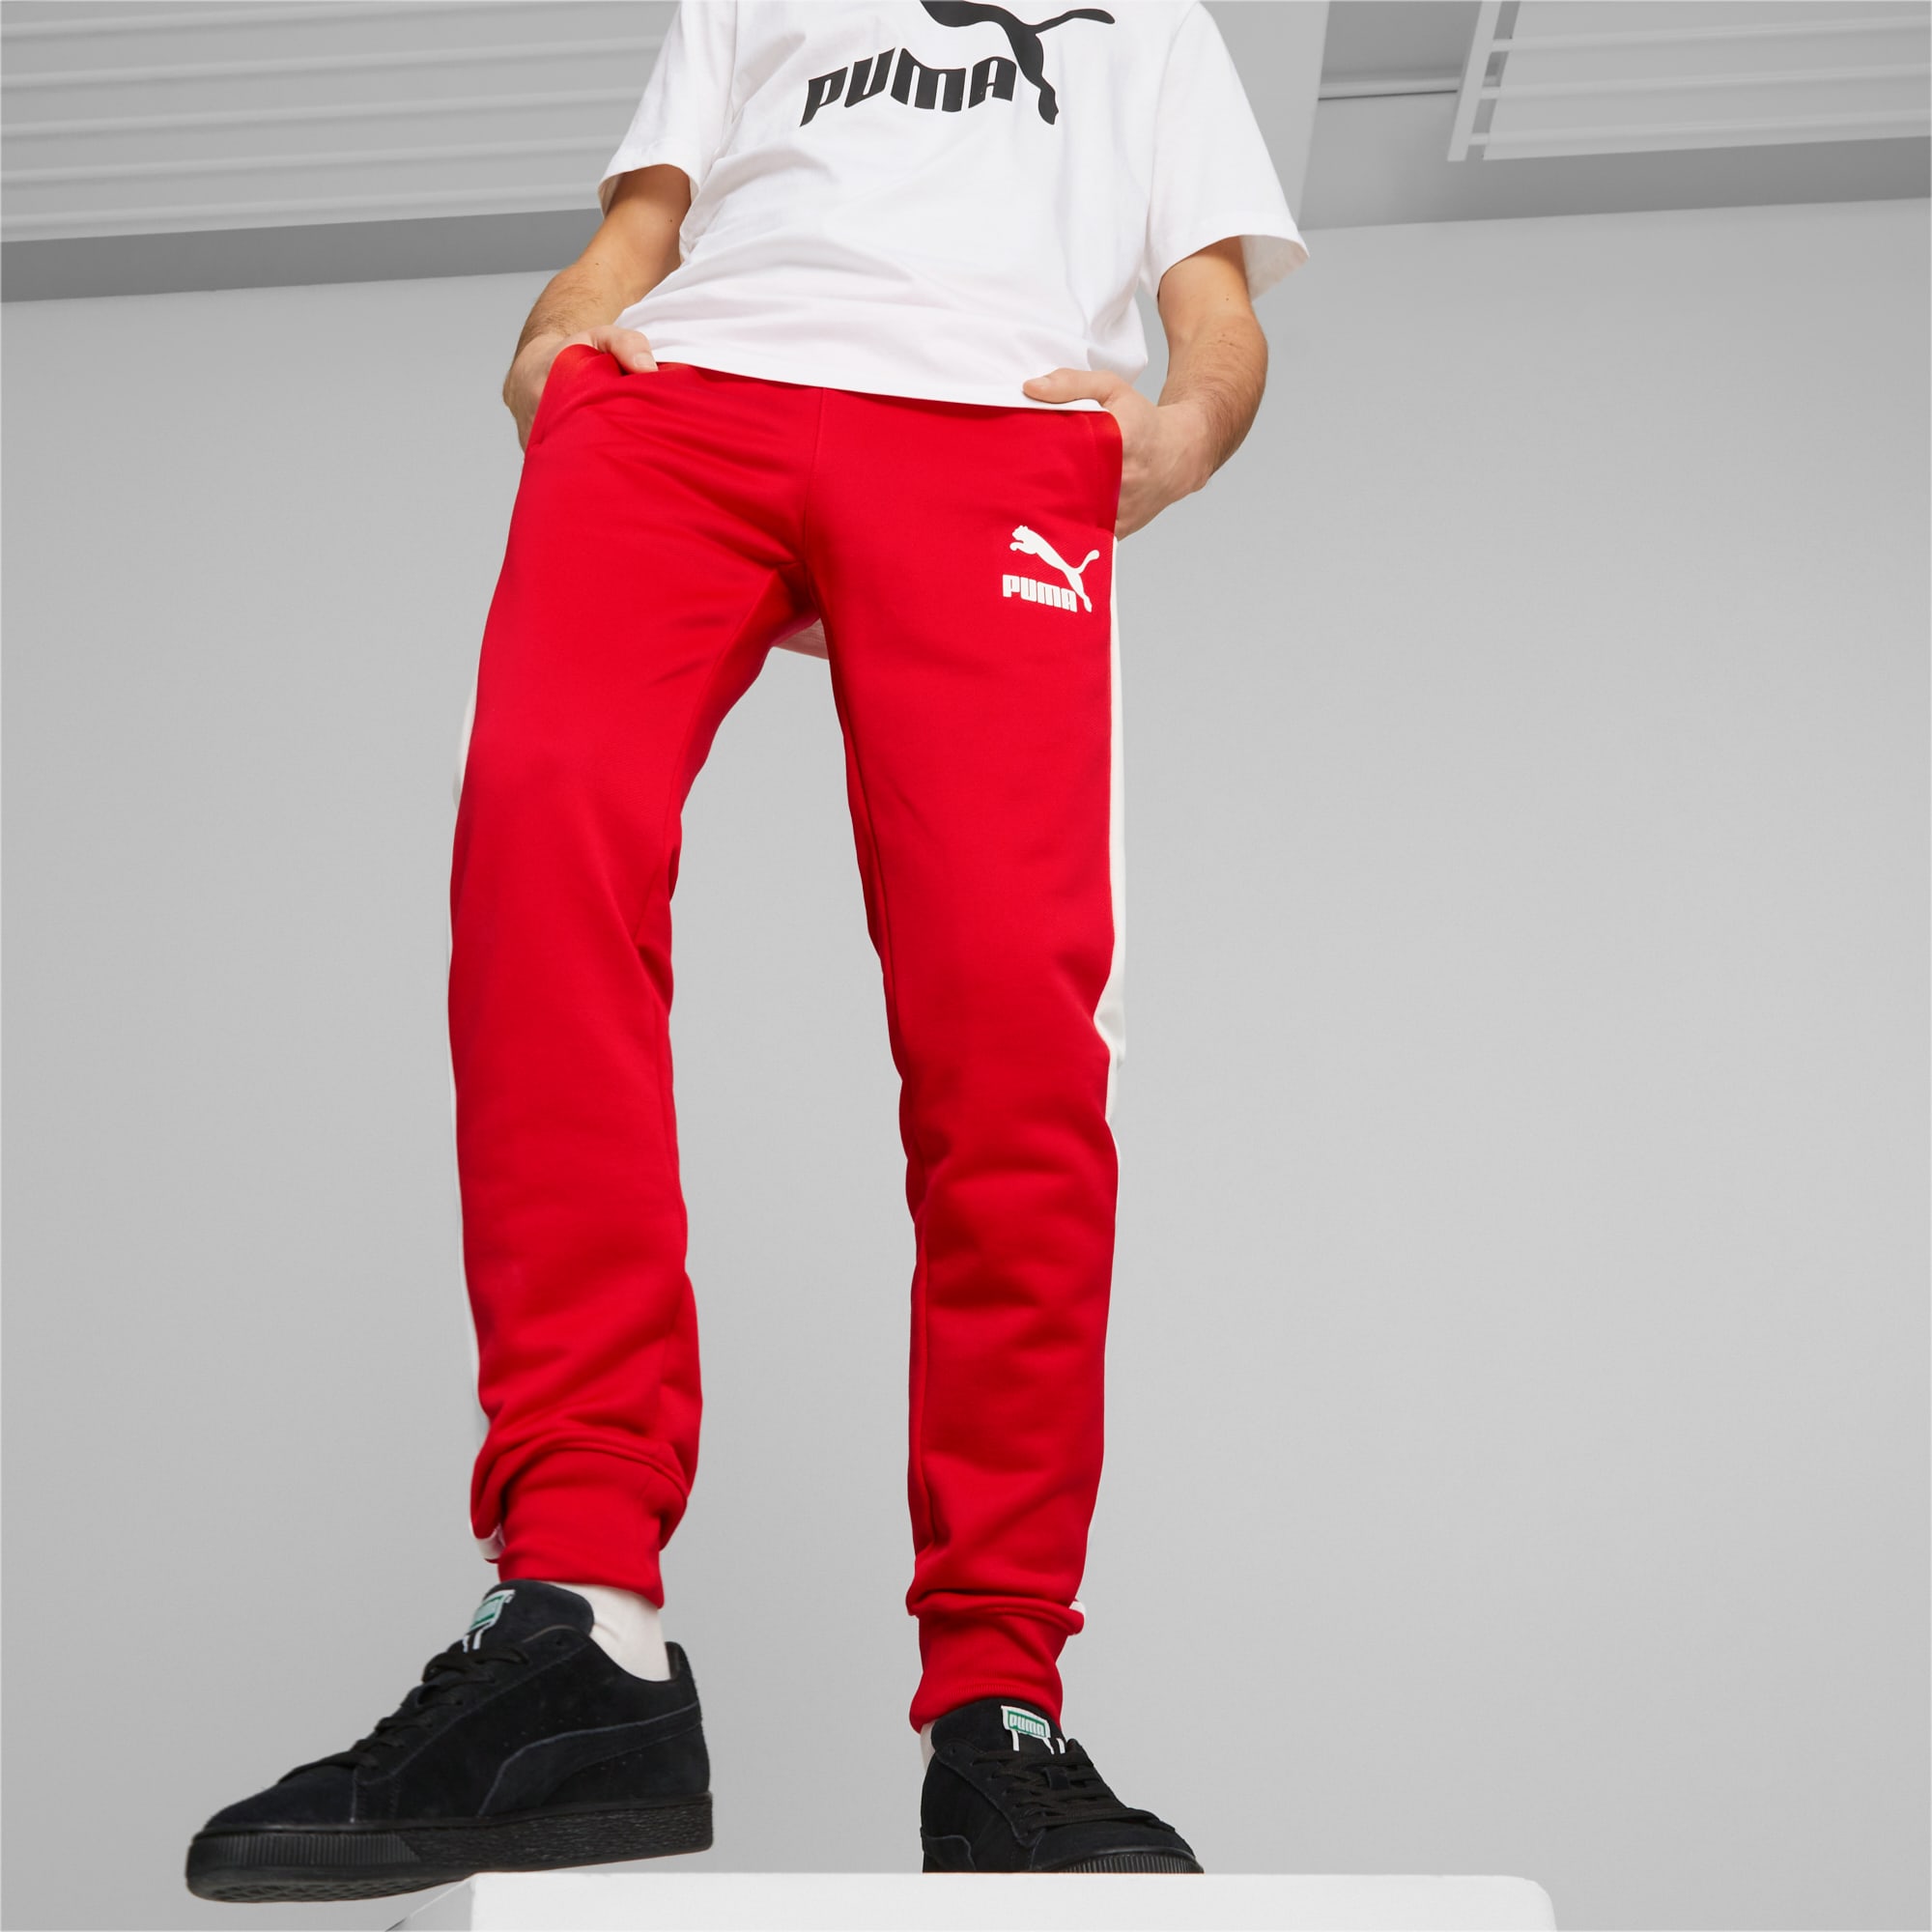 PUMA Iconic T7 Herren Trainingshose, Rot, Größe: M, Kleidung